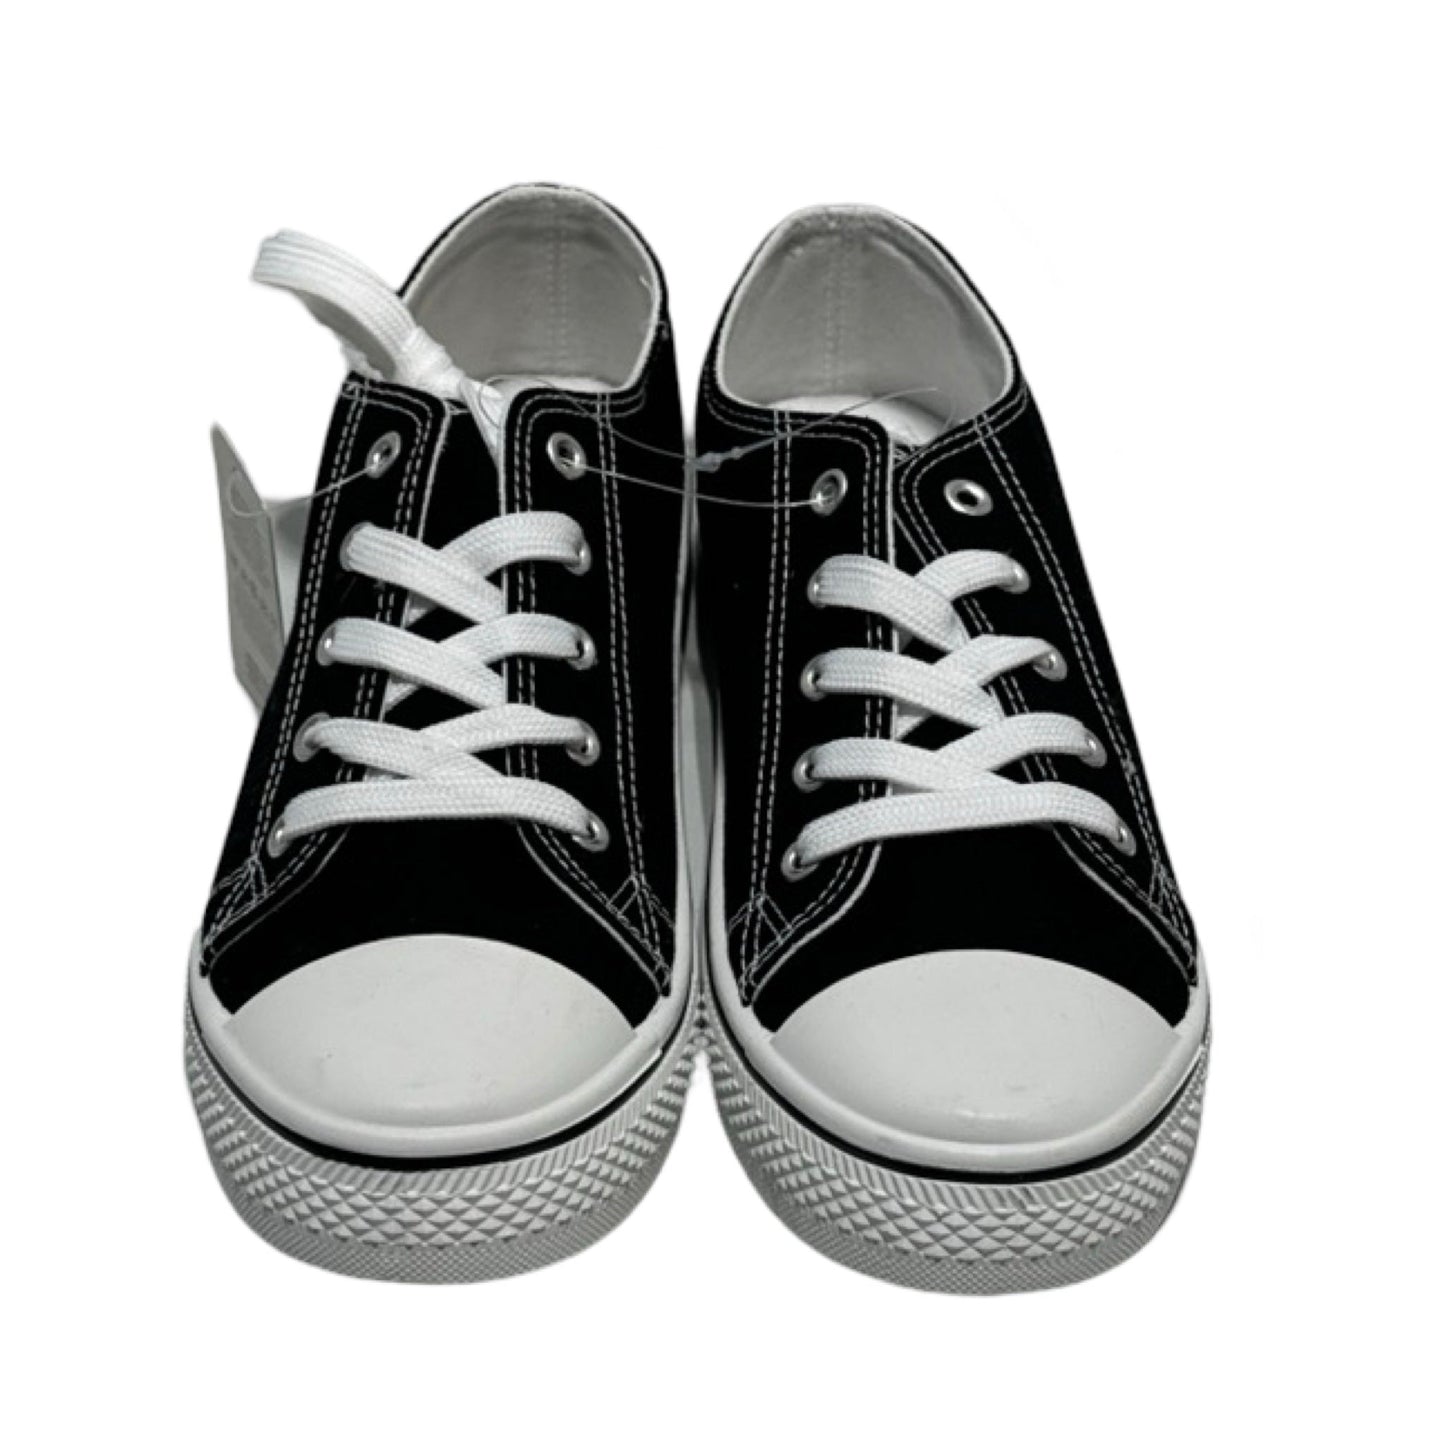 Black & White Shoes Sneakers Josiny, Size 9